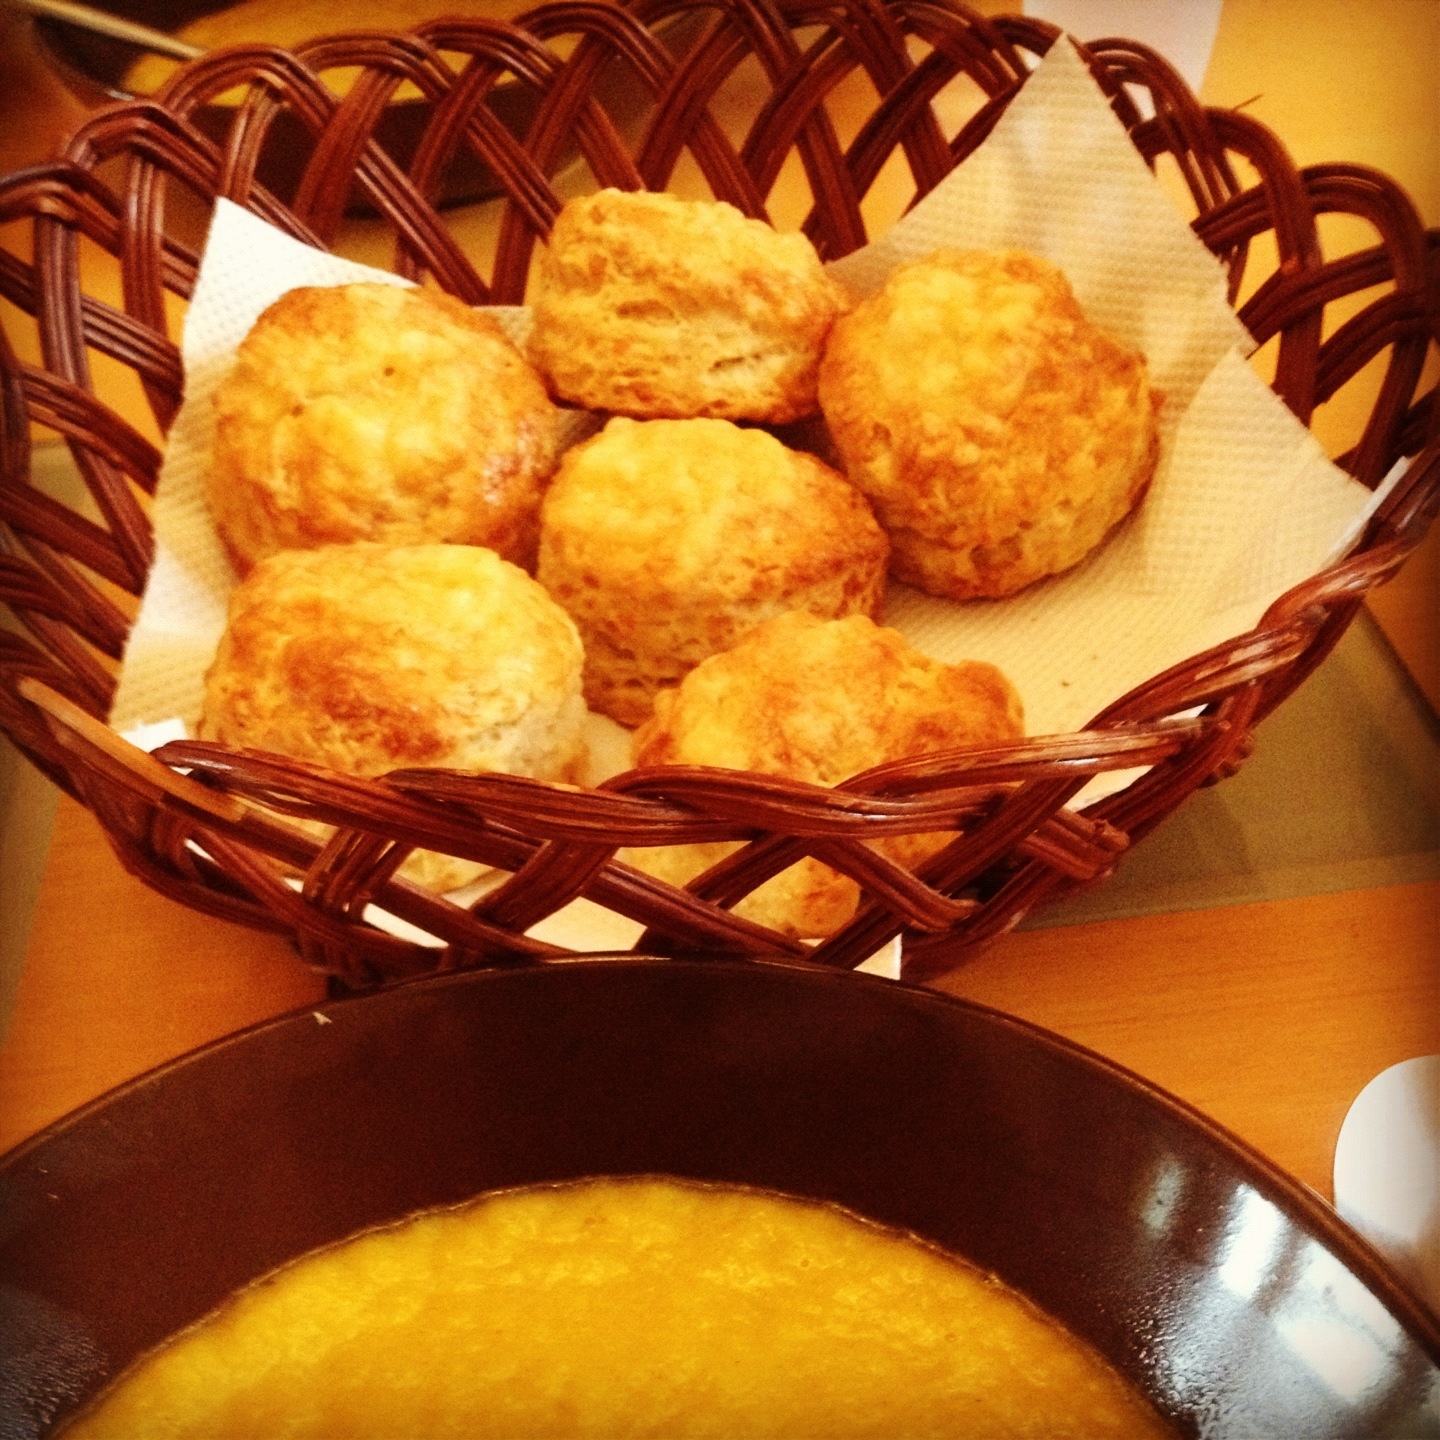 Fridge soup with Cheese scones